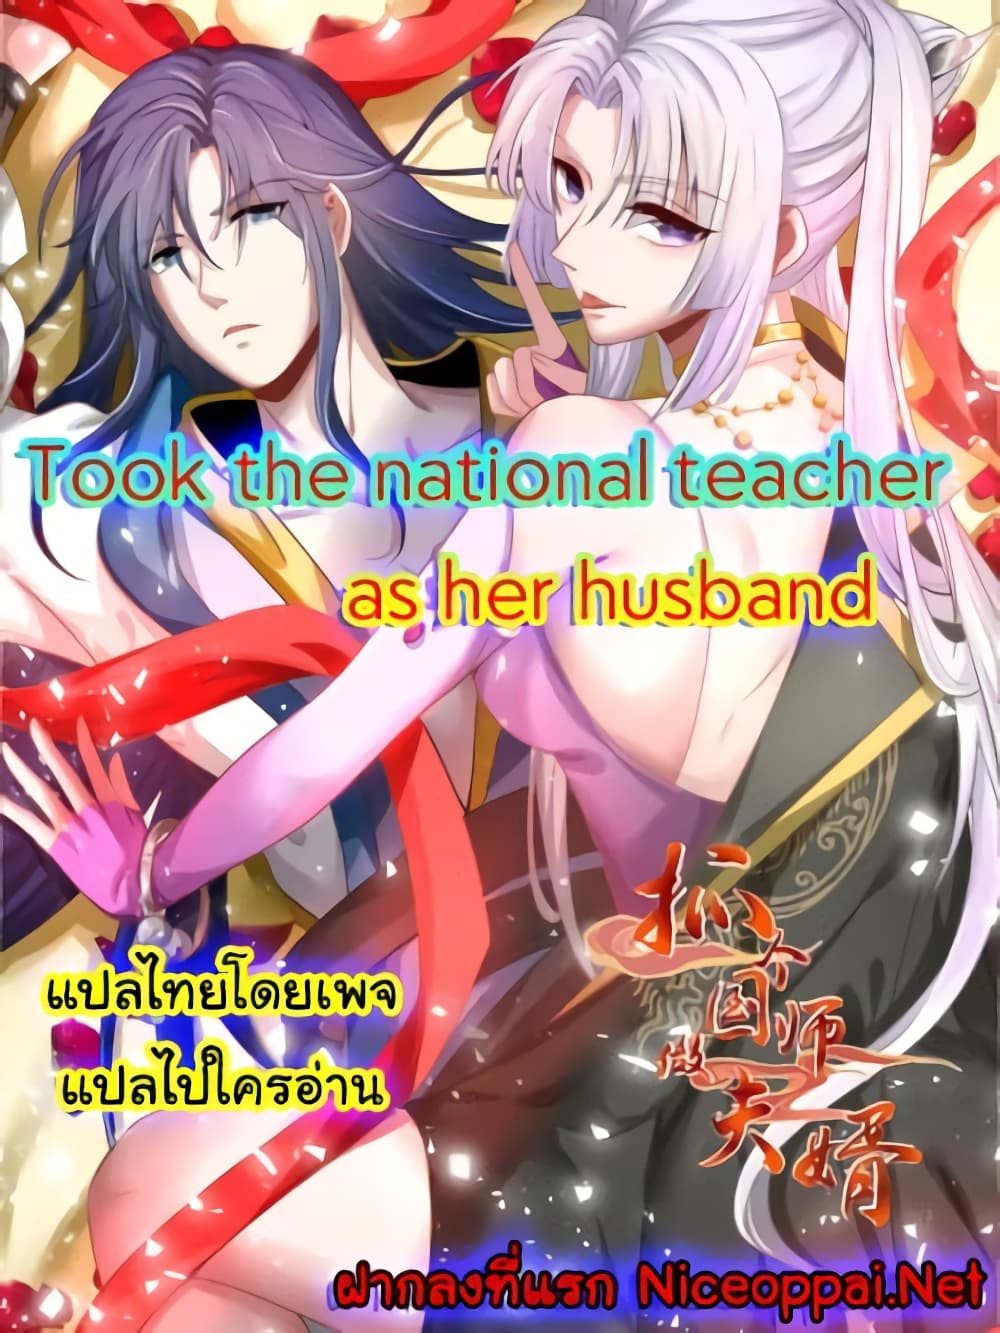 Took the National Teacher as Her Husband 16 (1)